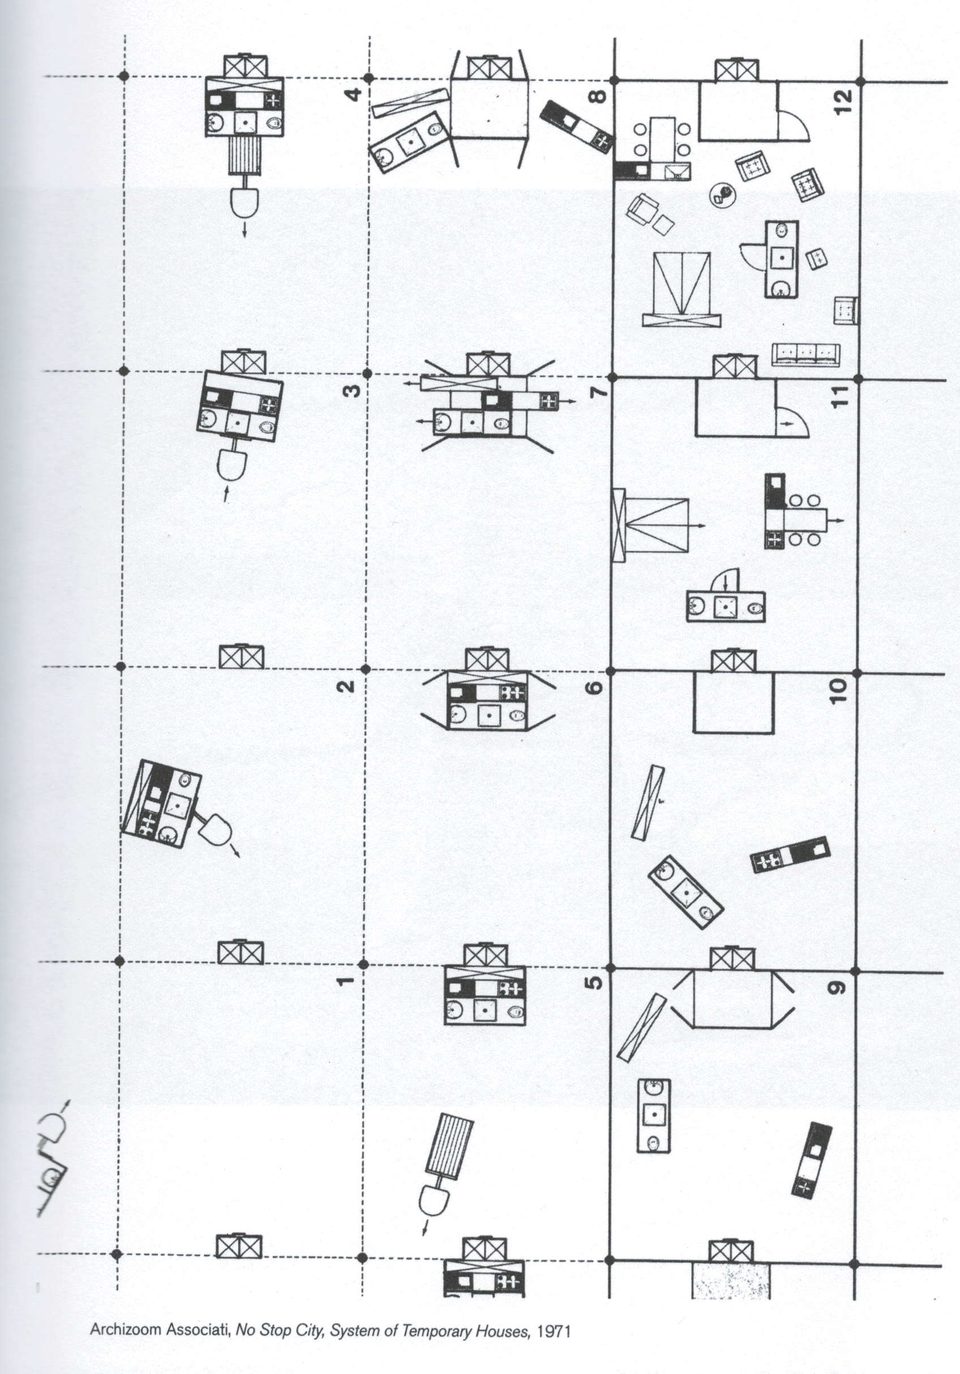 Archizoom Associati, No-Stop City, System of Temporary Houses, 1971 – forrás: Elisa C. Cattanado (ed.), Andrea Branzi, E=mc2: The Project in the Age of Creativity, Actar Publishers, 2020, p. 297.